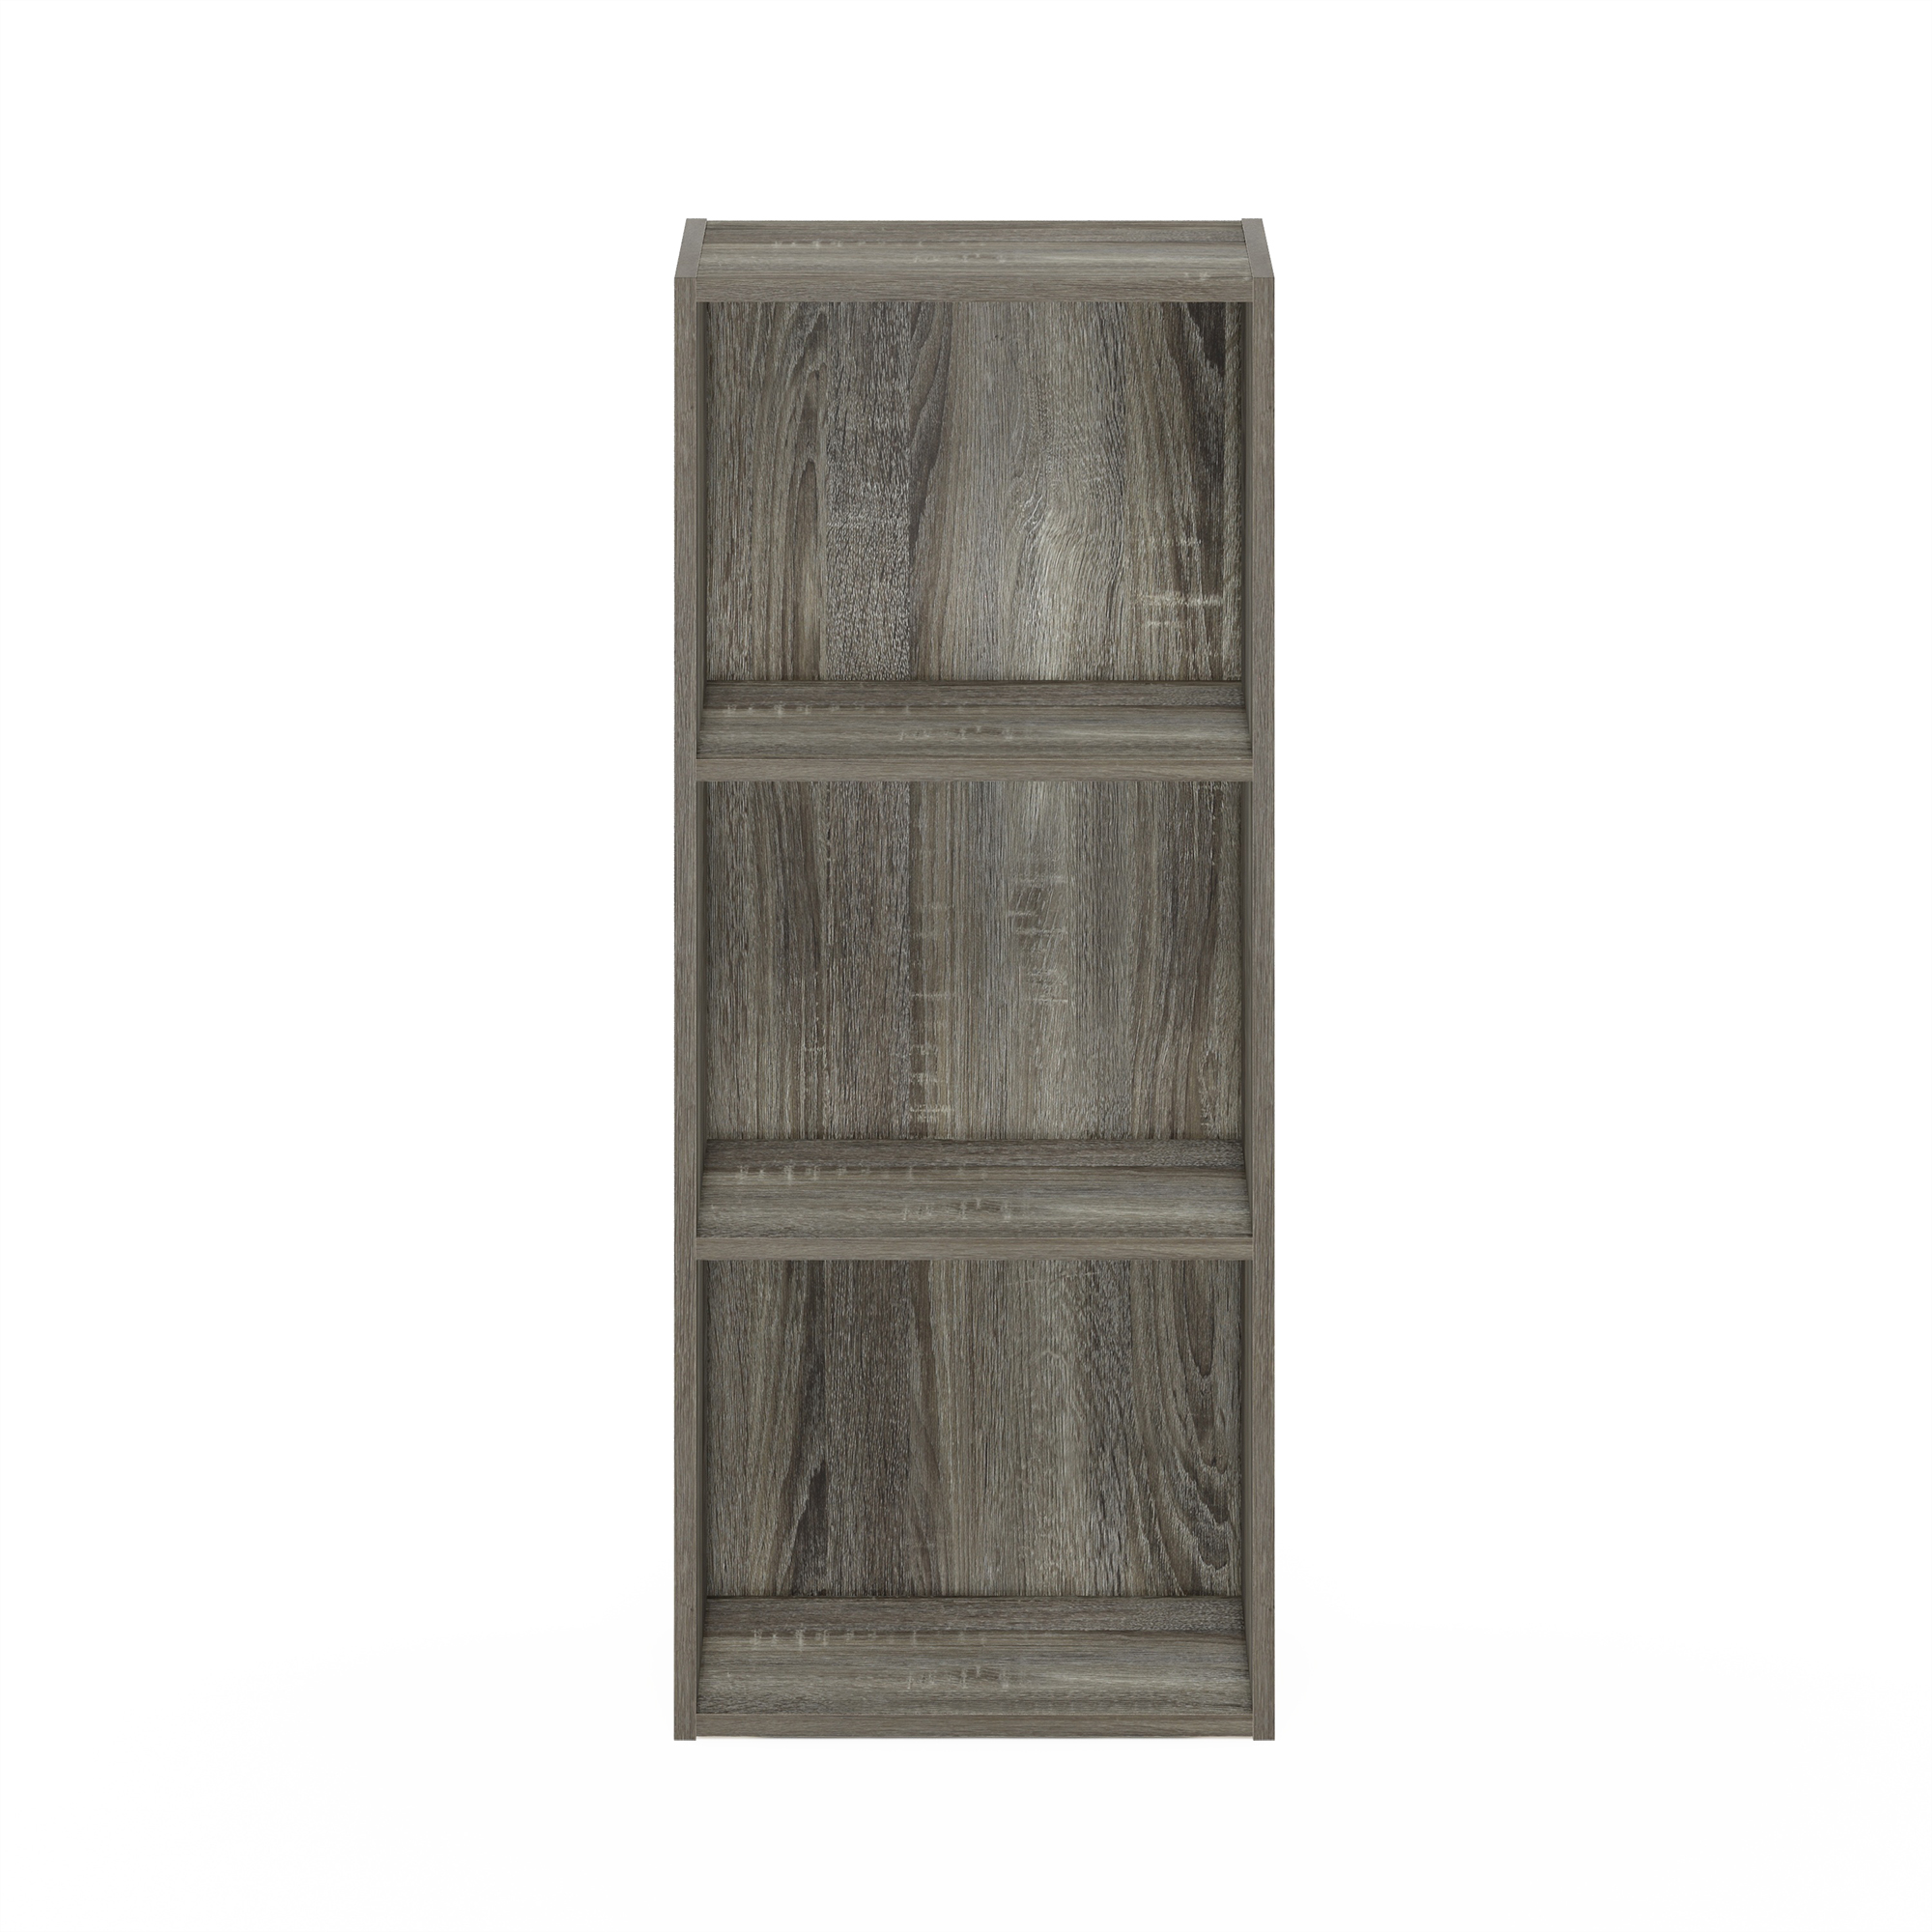 Furinno Luder 3-Tier Open Shelf Bookcase, French Oak - image 4 of 5